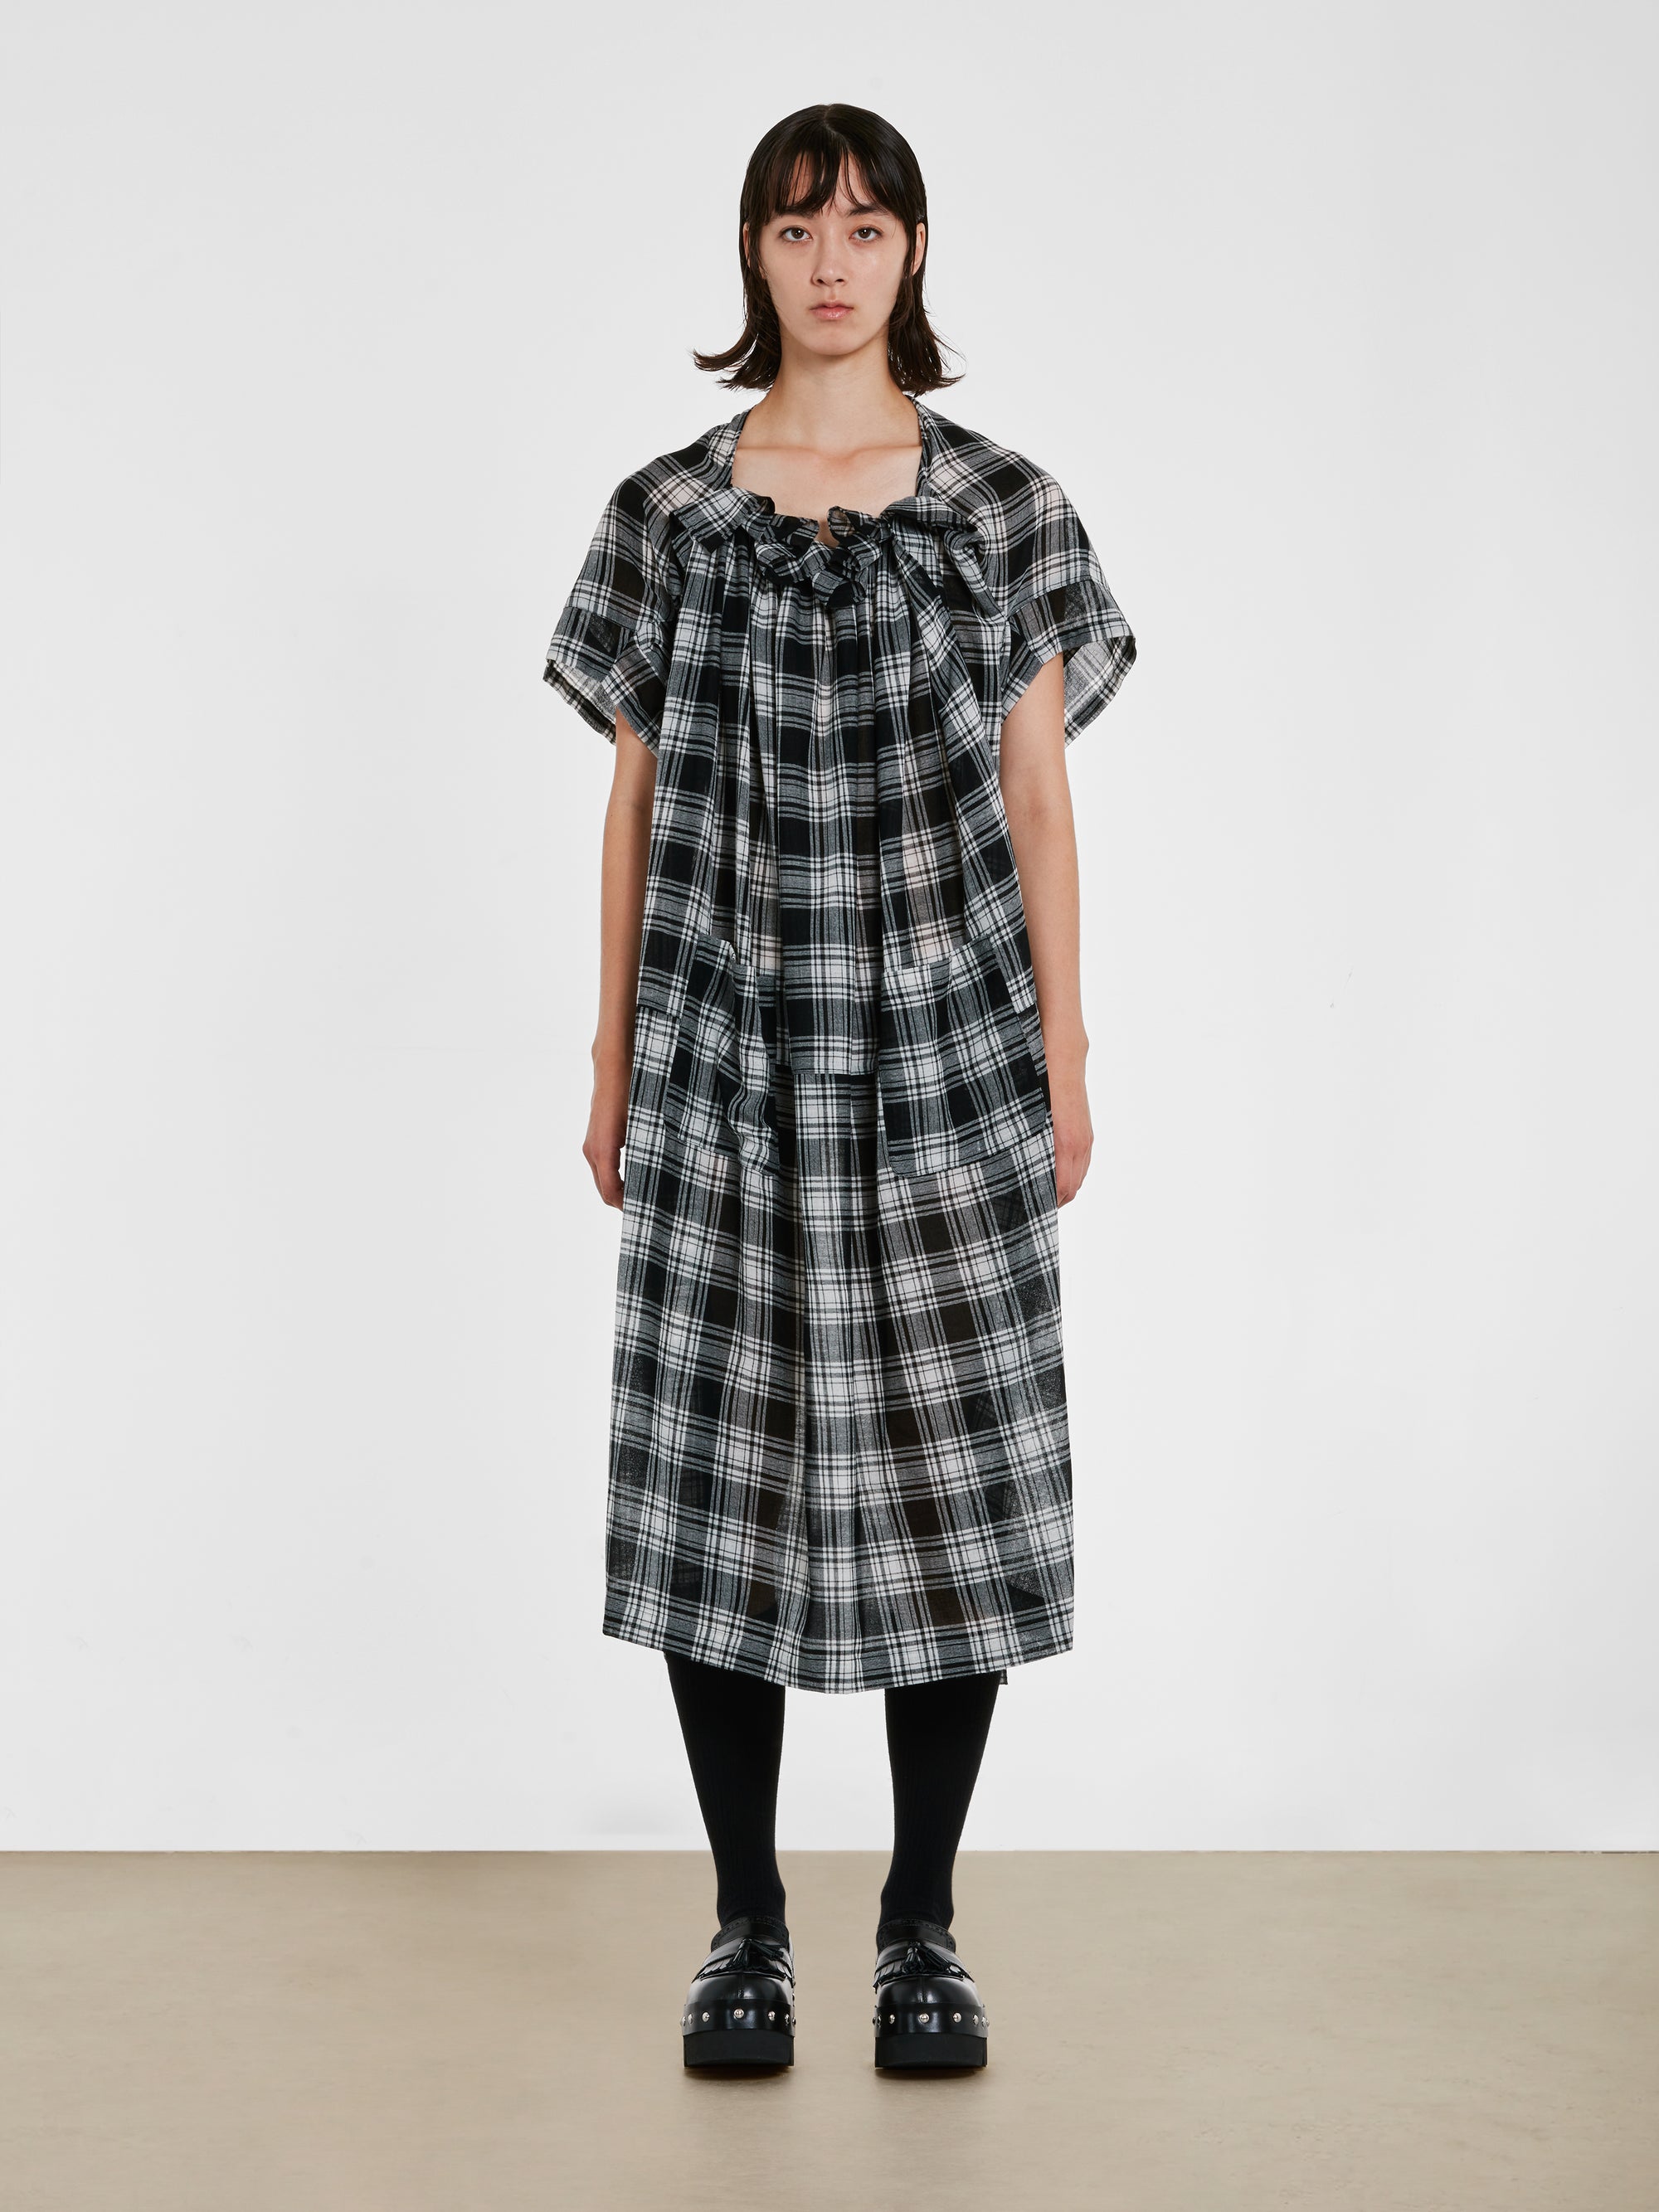 tao - Women’s Tartan Dress - (Black/White) view 1